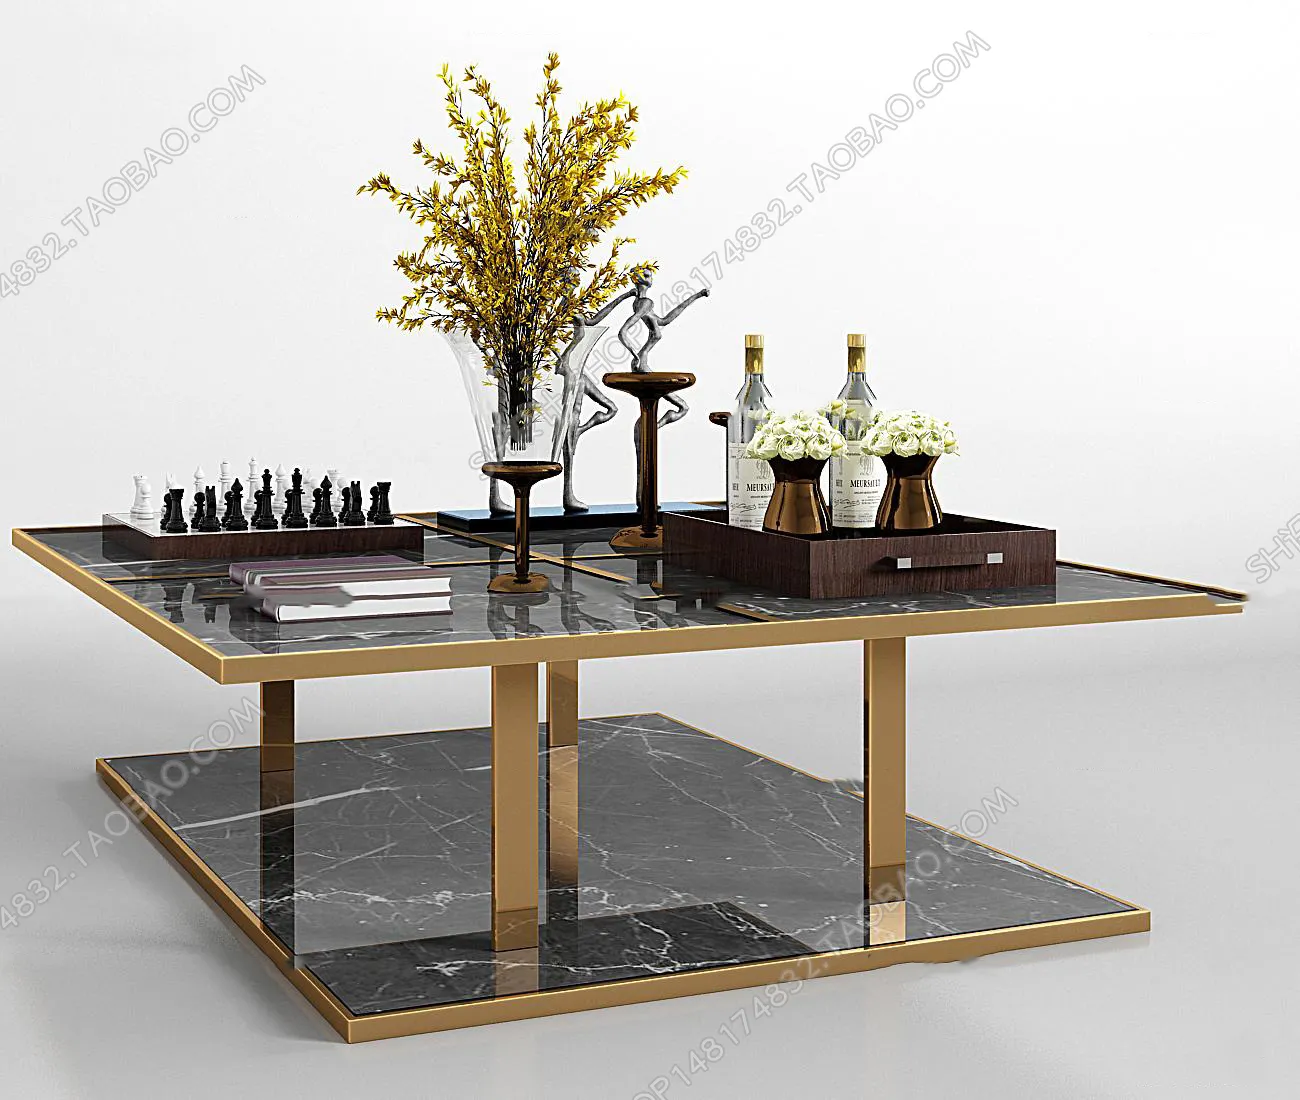 3DSKY MODELS – COFFEE TABLE 3D MODELS – 033